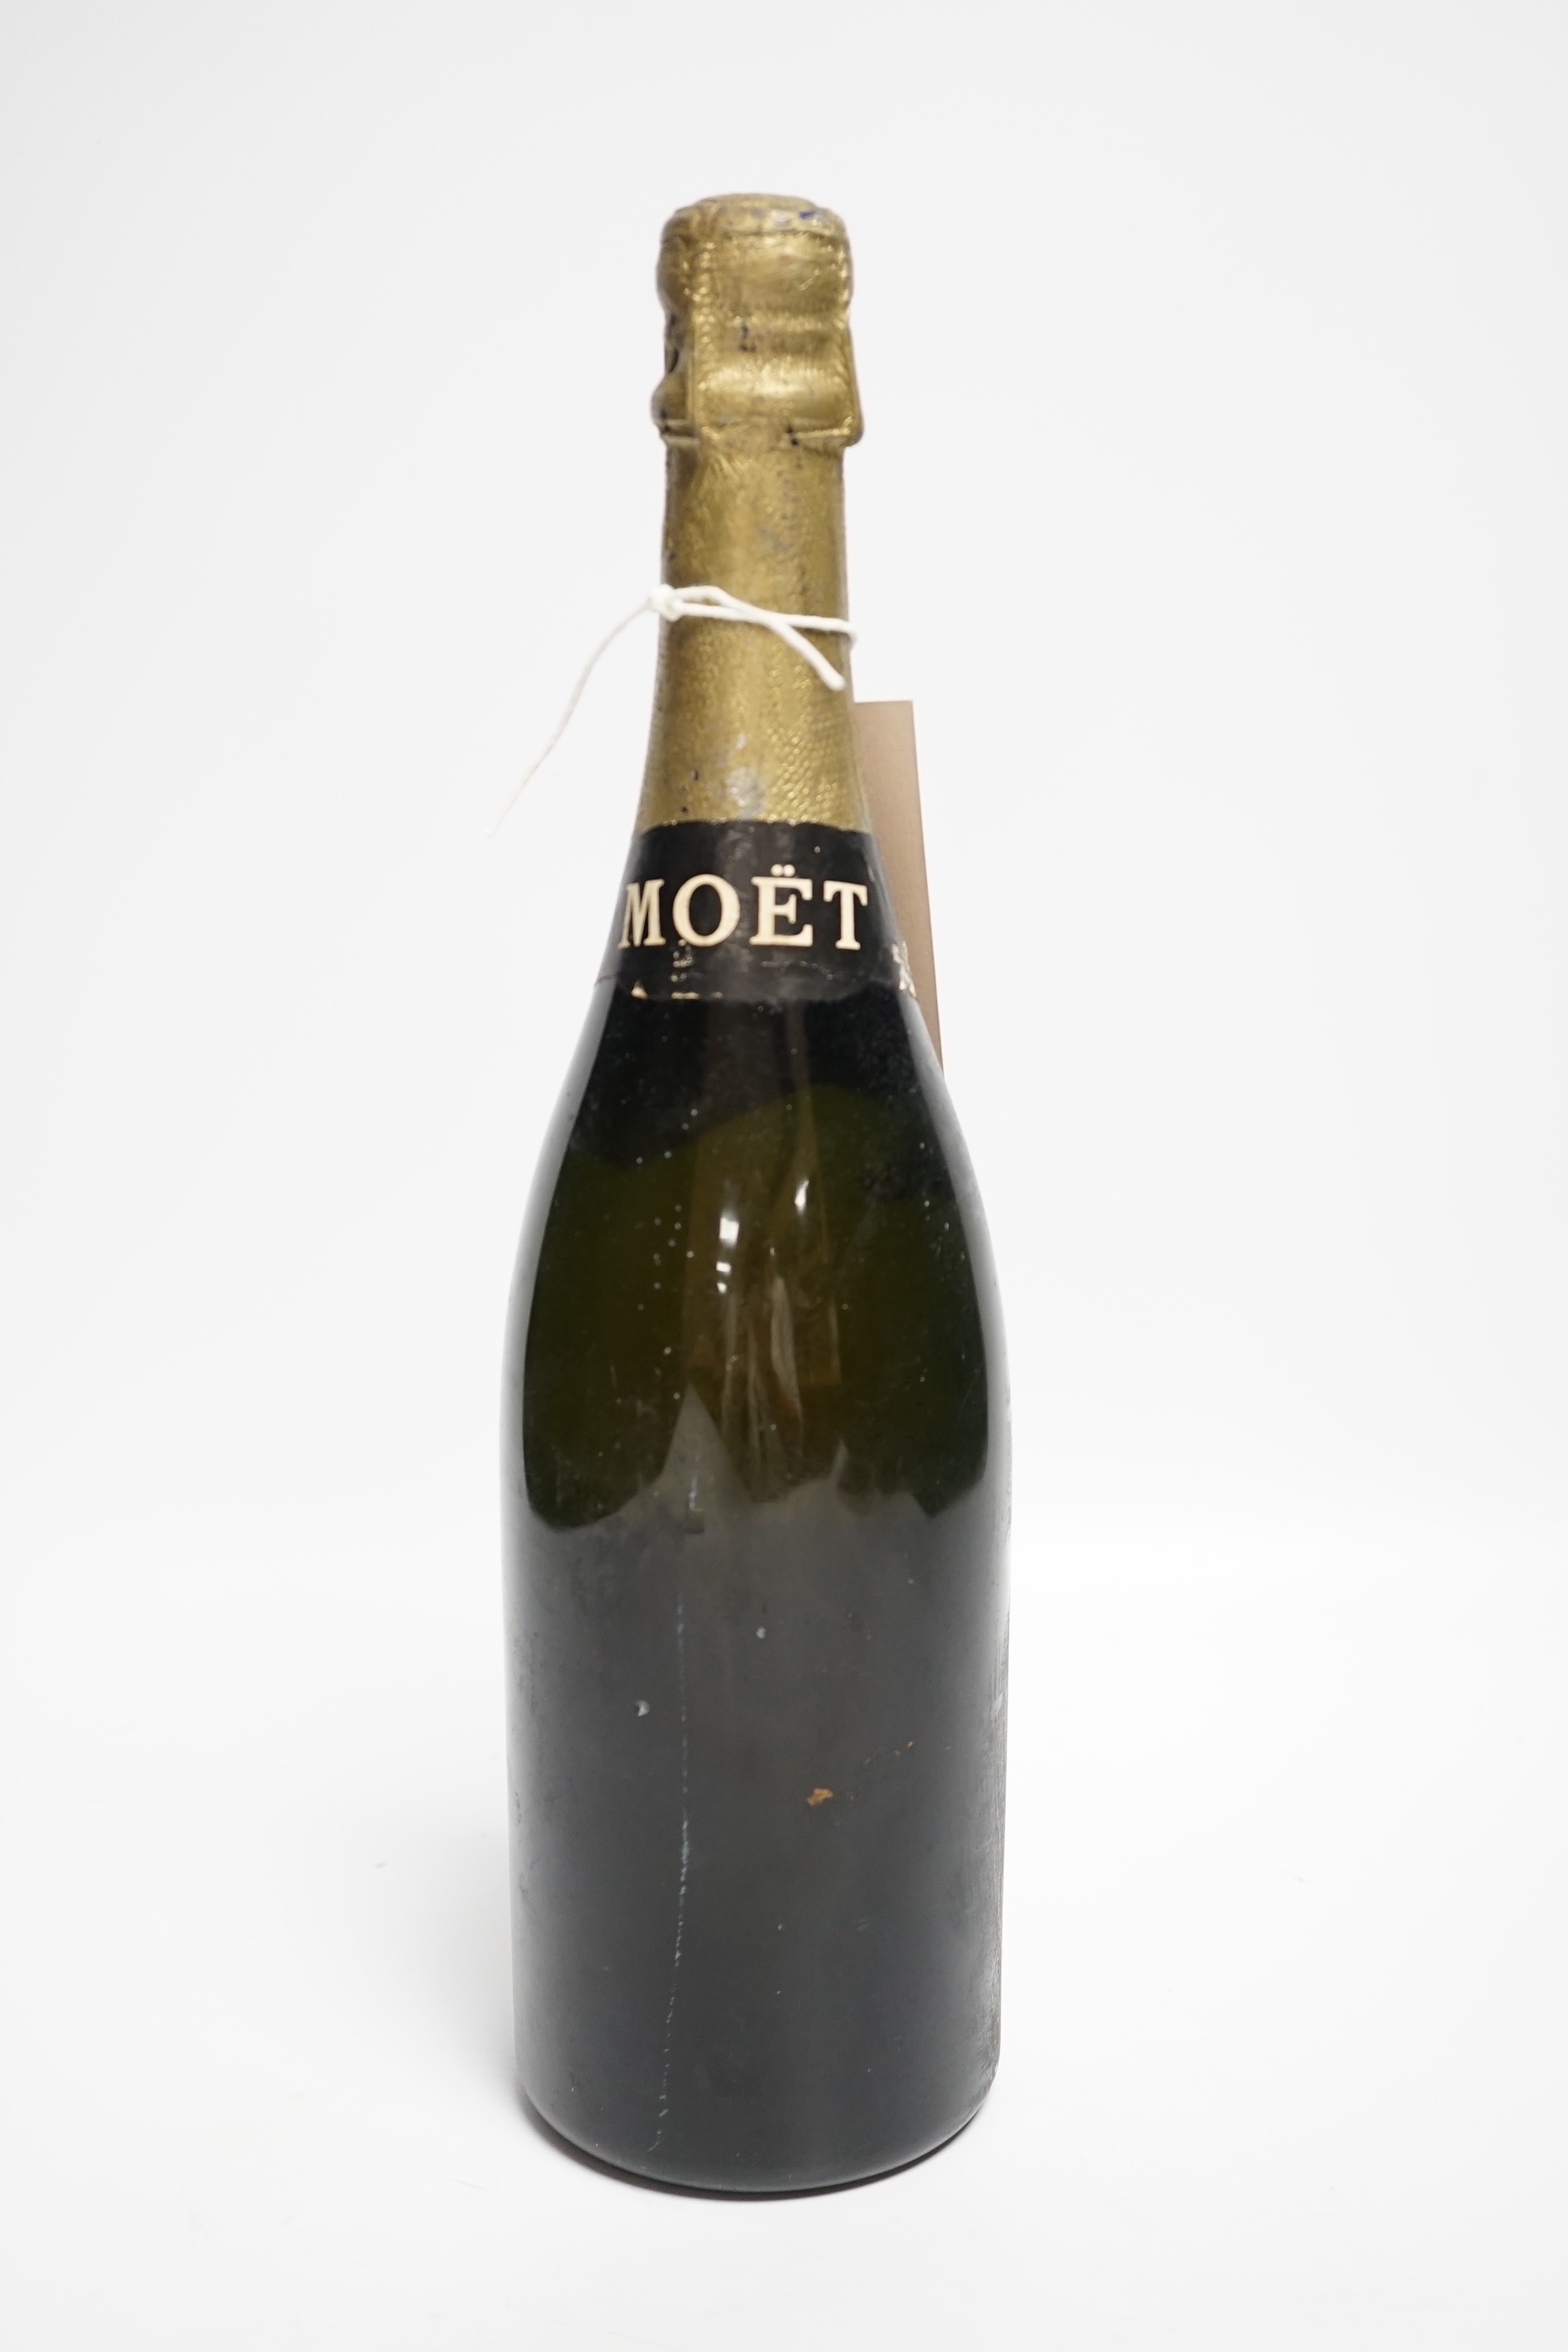 A bottle of Moet et Chandon champagne - Image 3 of 6